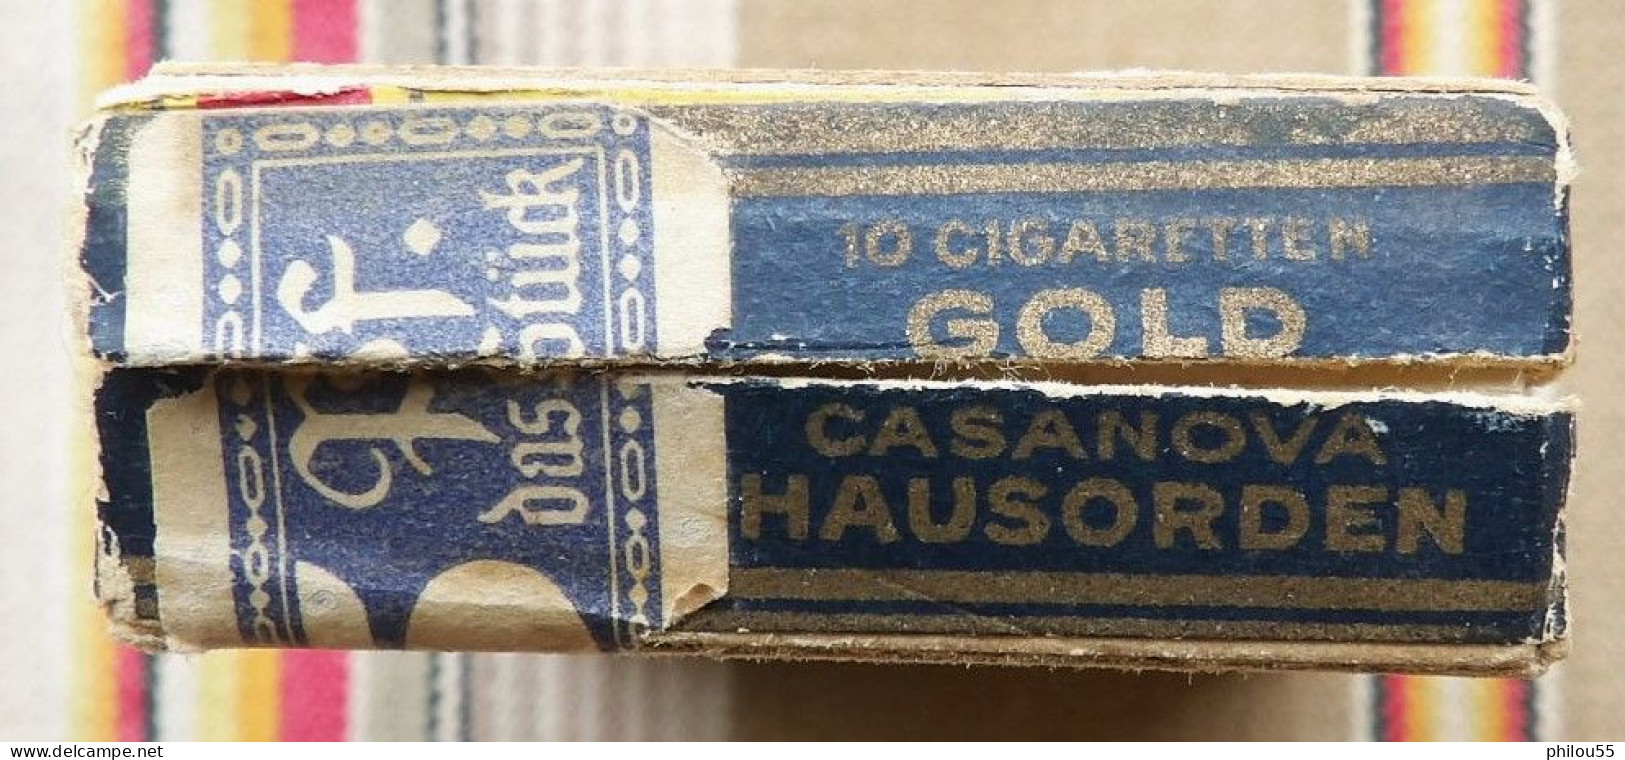 COLLECTION Boite Vide 10 Cigarettes CASANOVA HAUSORDEN GOLD - Etuis à Cigarettes Vides